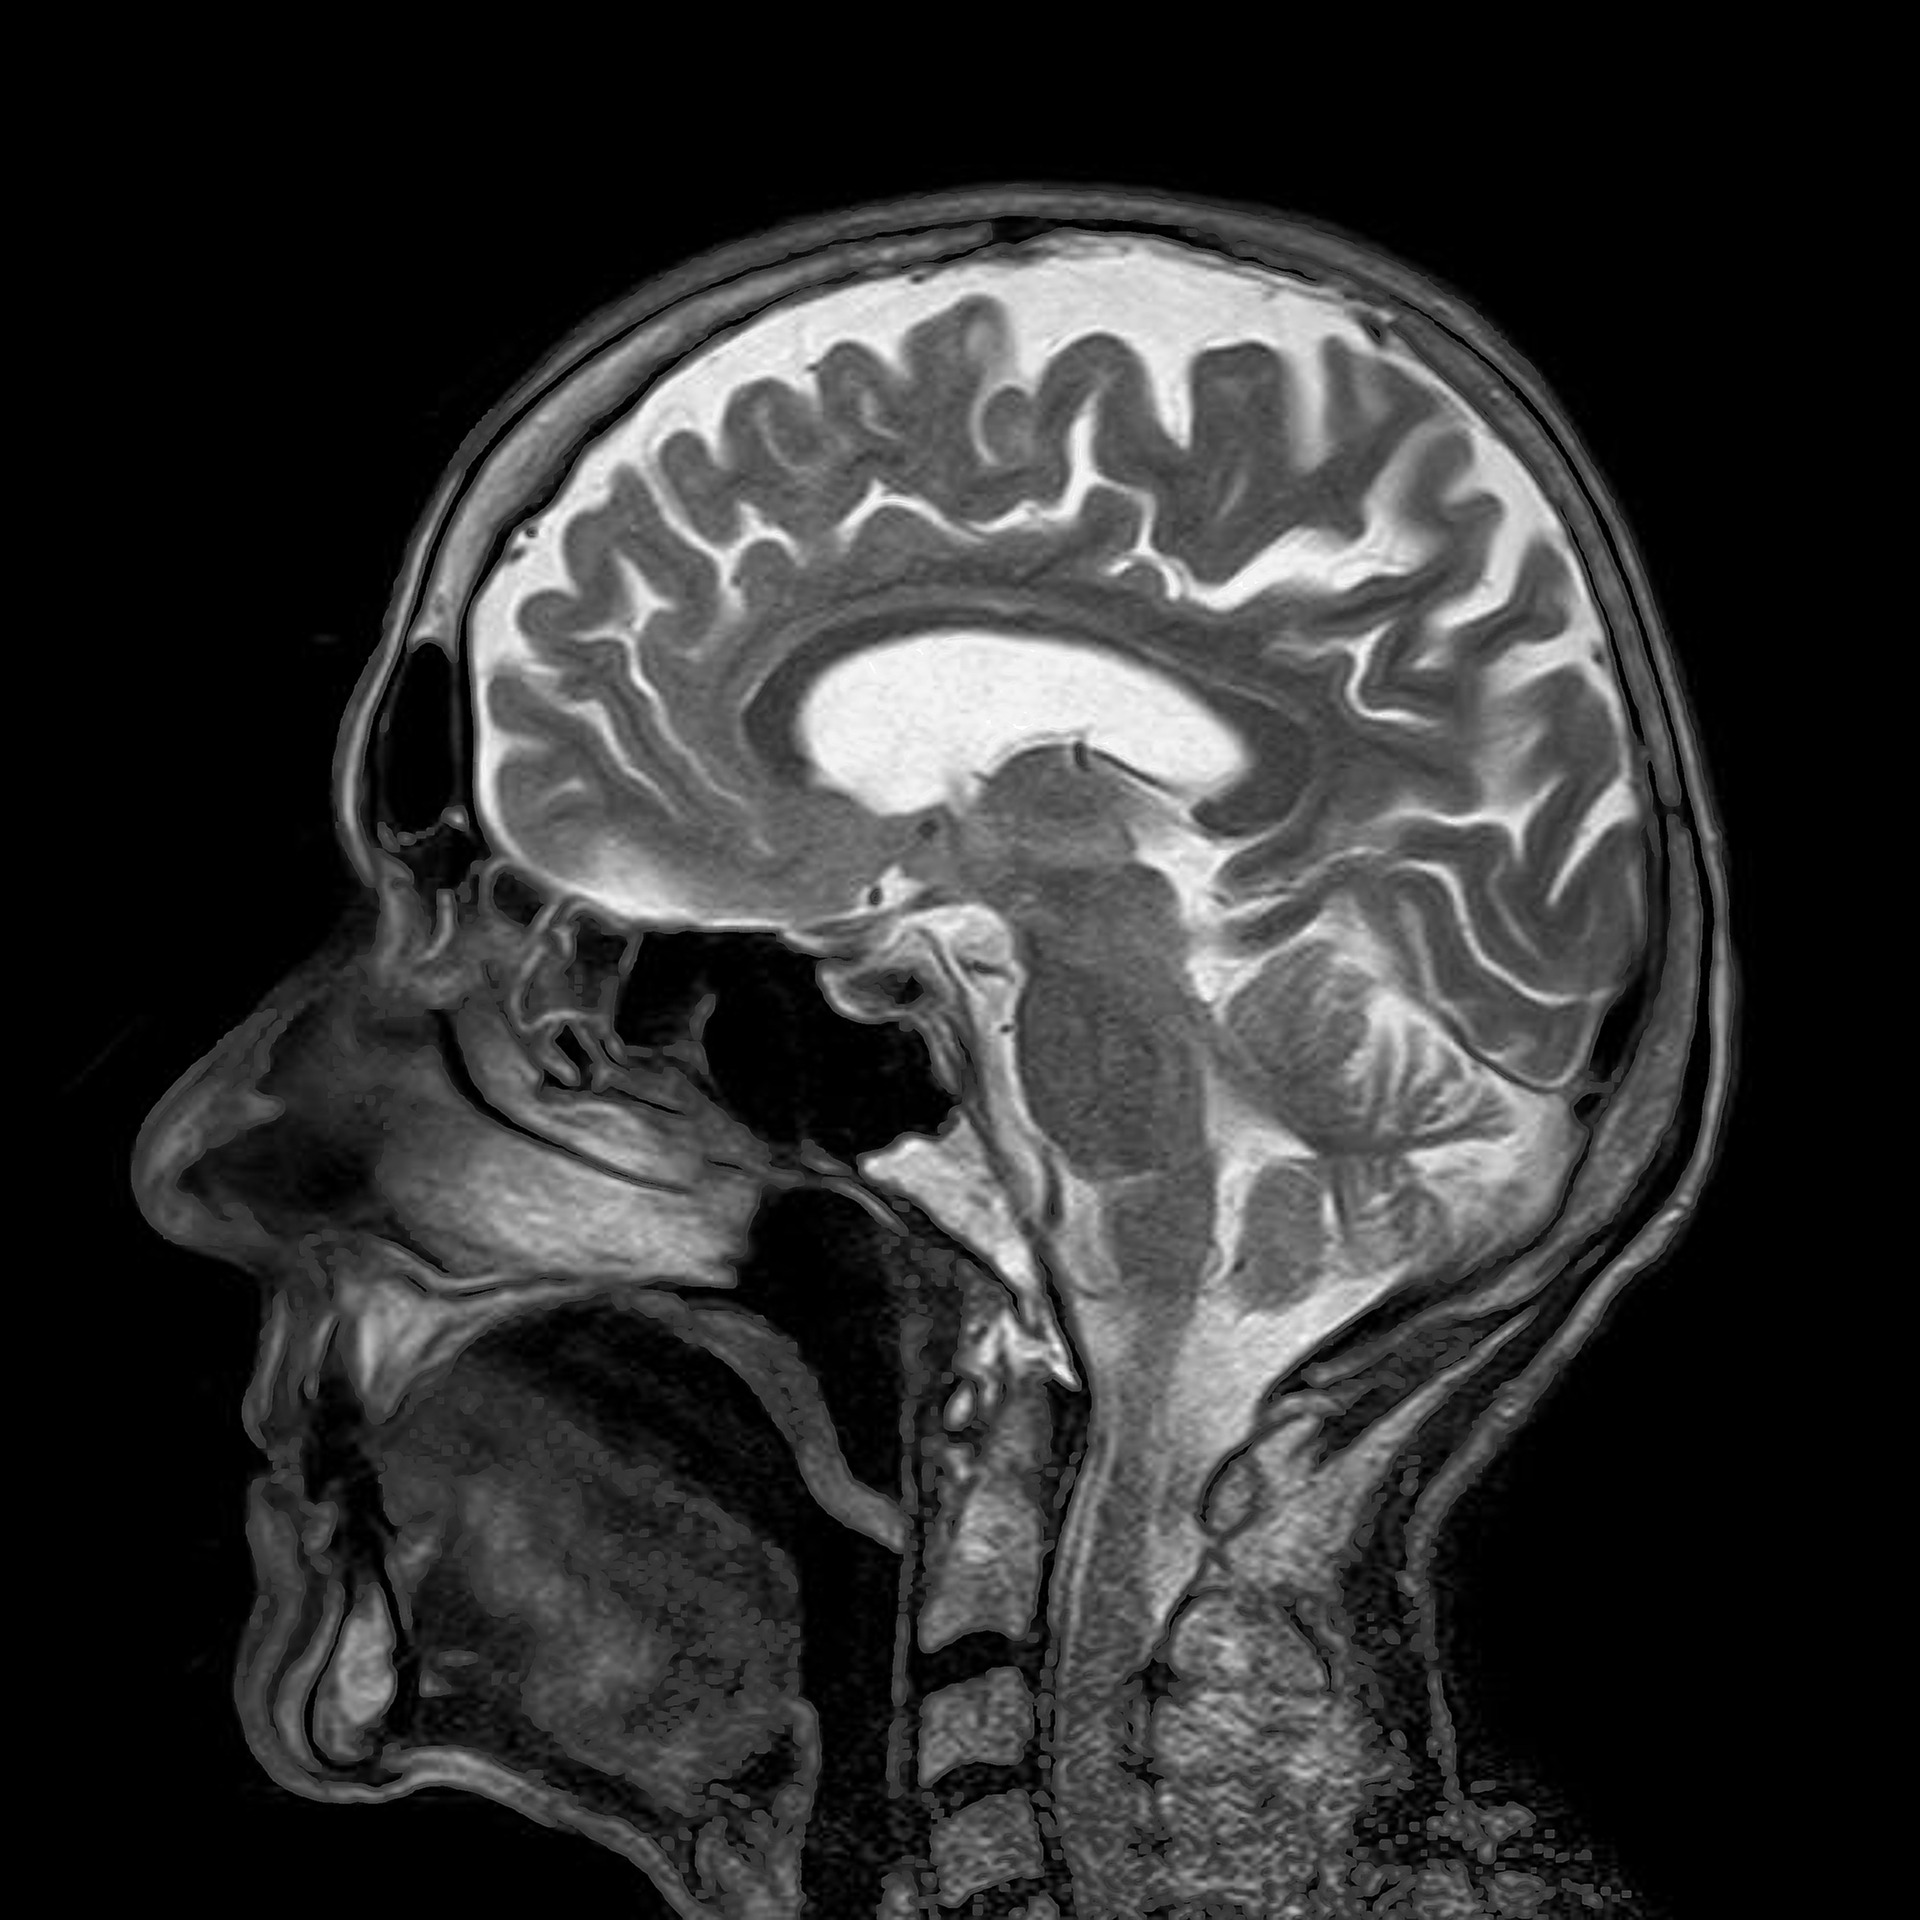 MRI representing Addiction as a Brain Disease